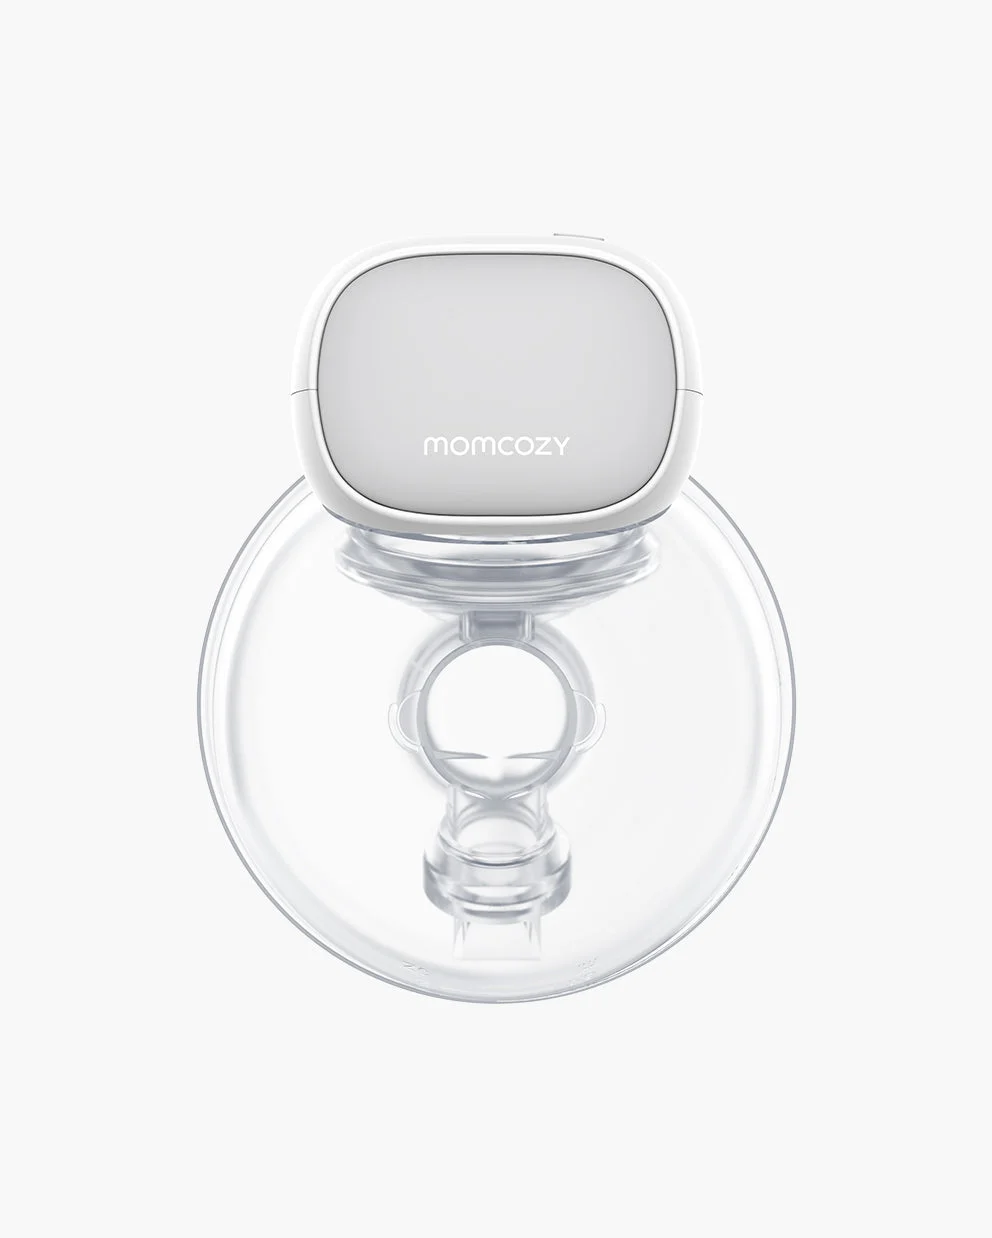 Momcozy S9 Pro Wearable Breast Pump